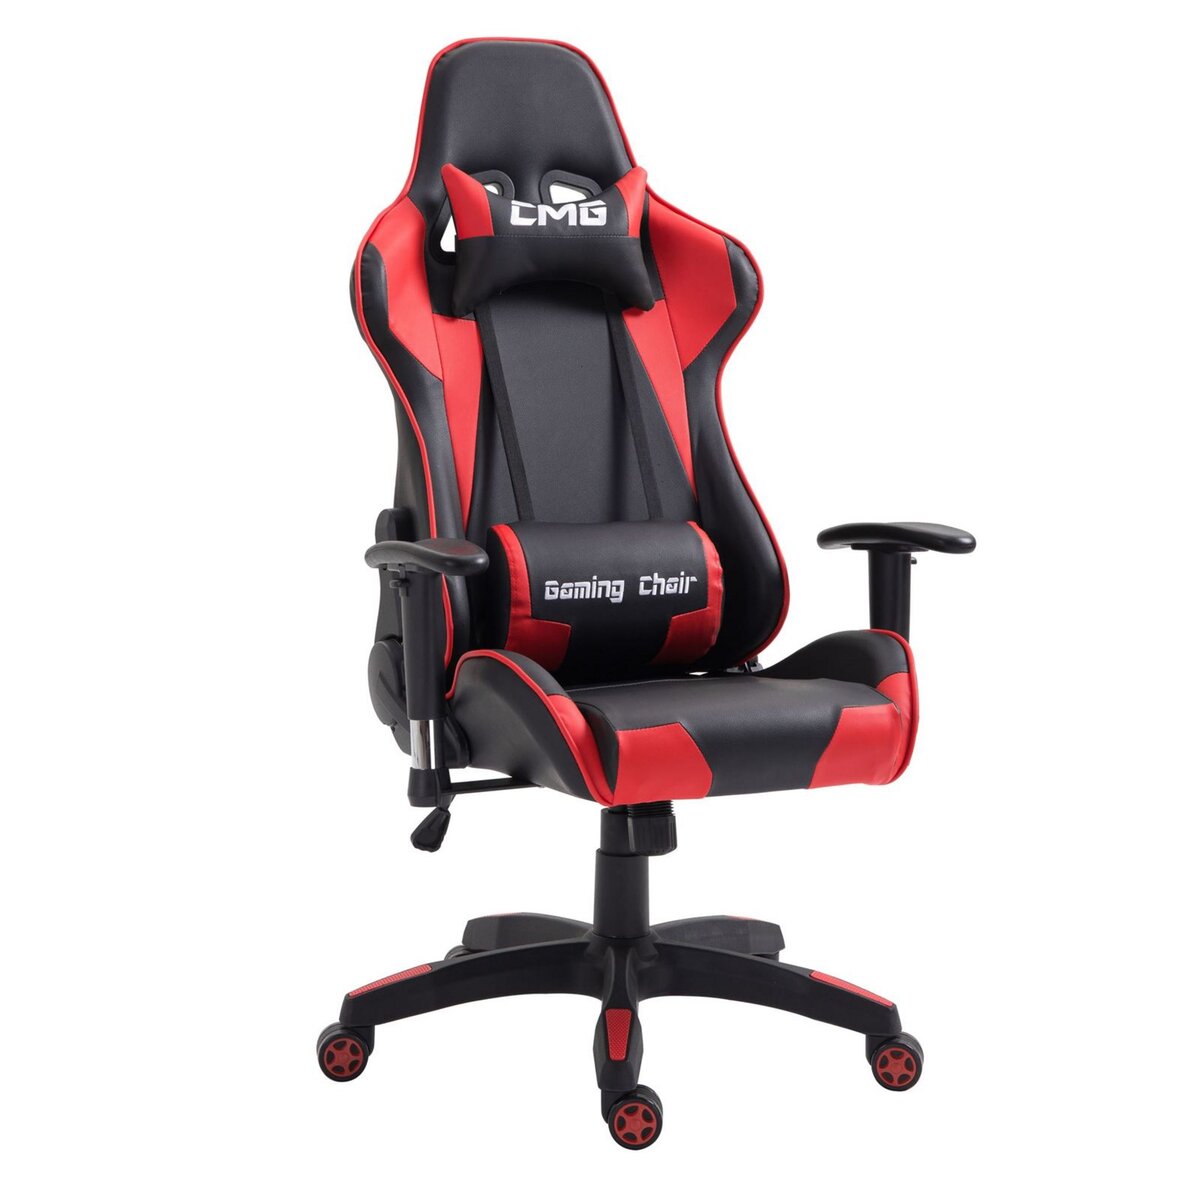 Chaise gaming ergonomique rouge confortable